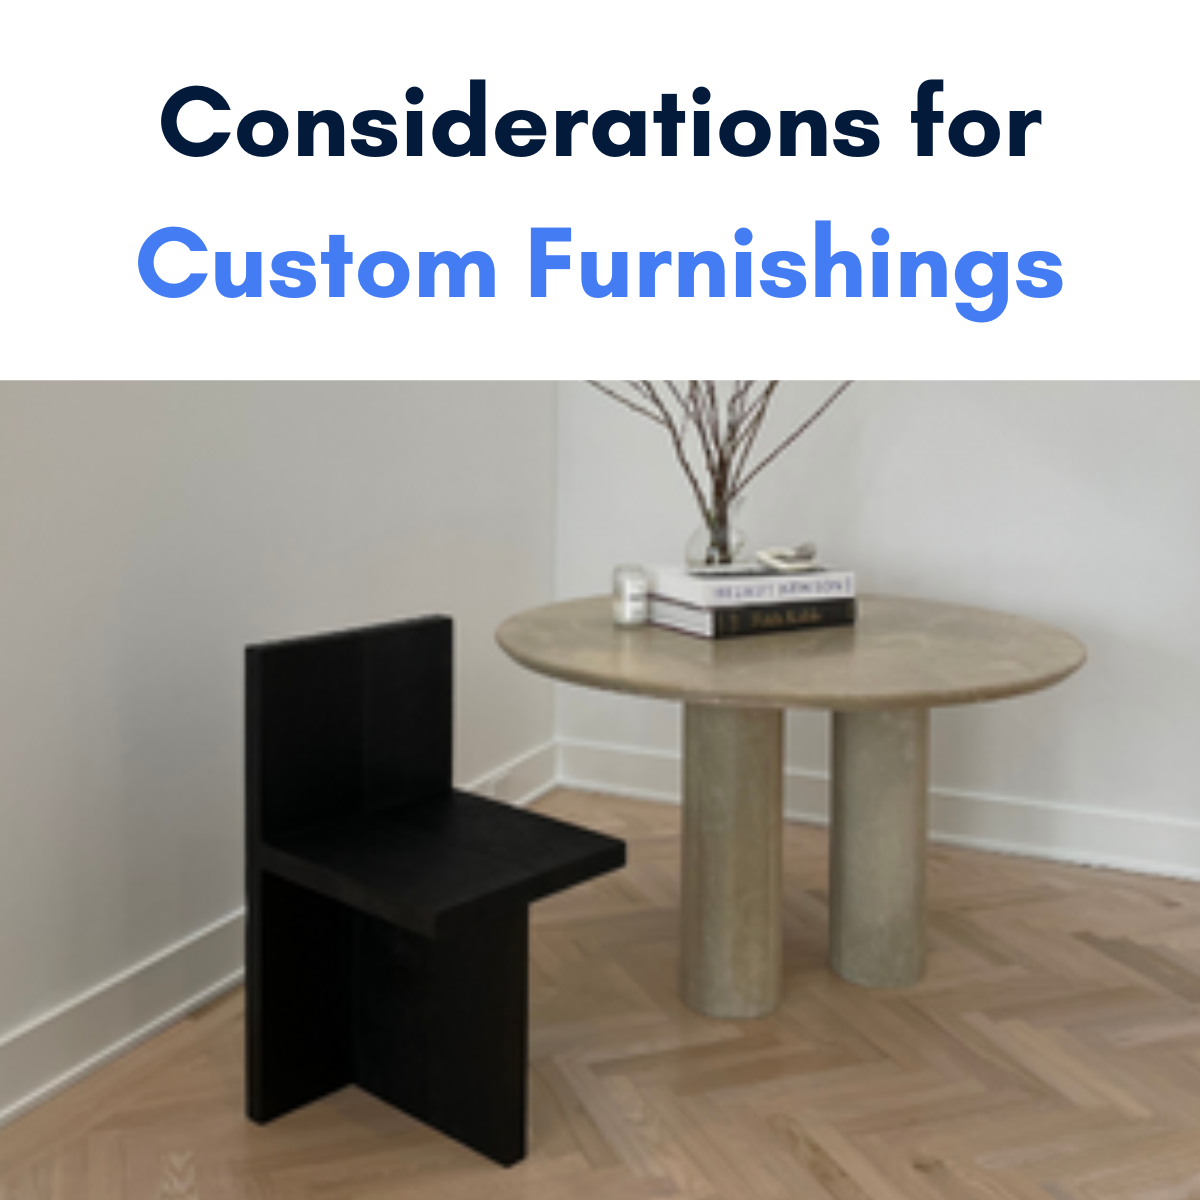 Considerations for Custom Furnishings